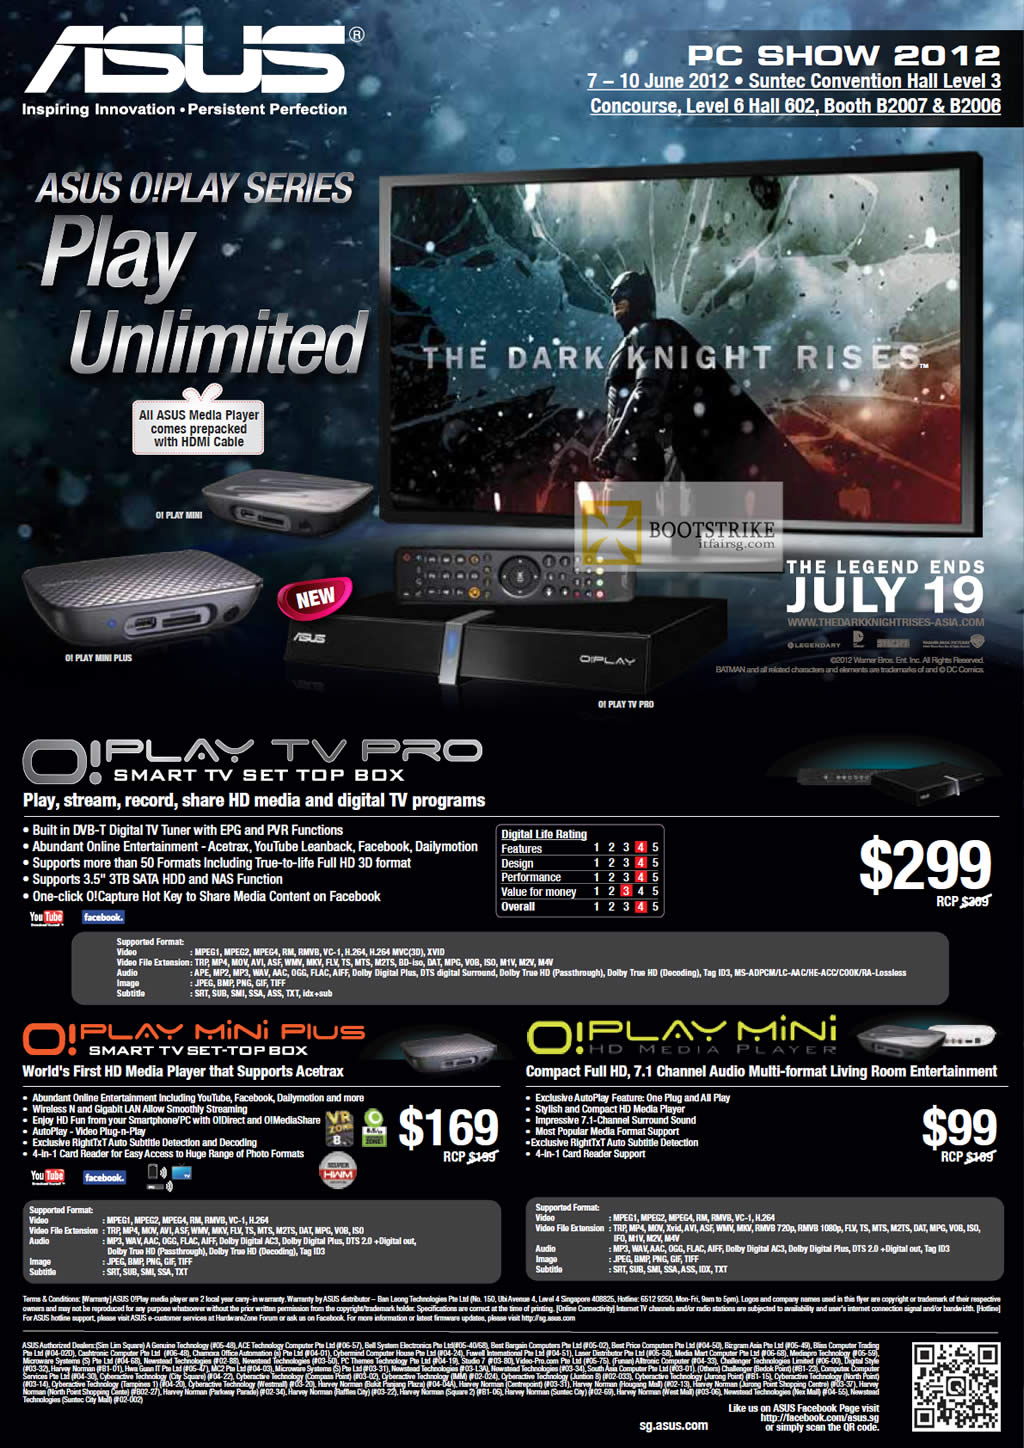 PC SHOW 2012 price list image brochure of ASUS Media Player O Play TV Pro, O Play Mini Plus, O Play Mini